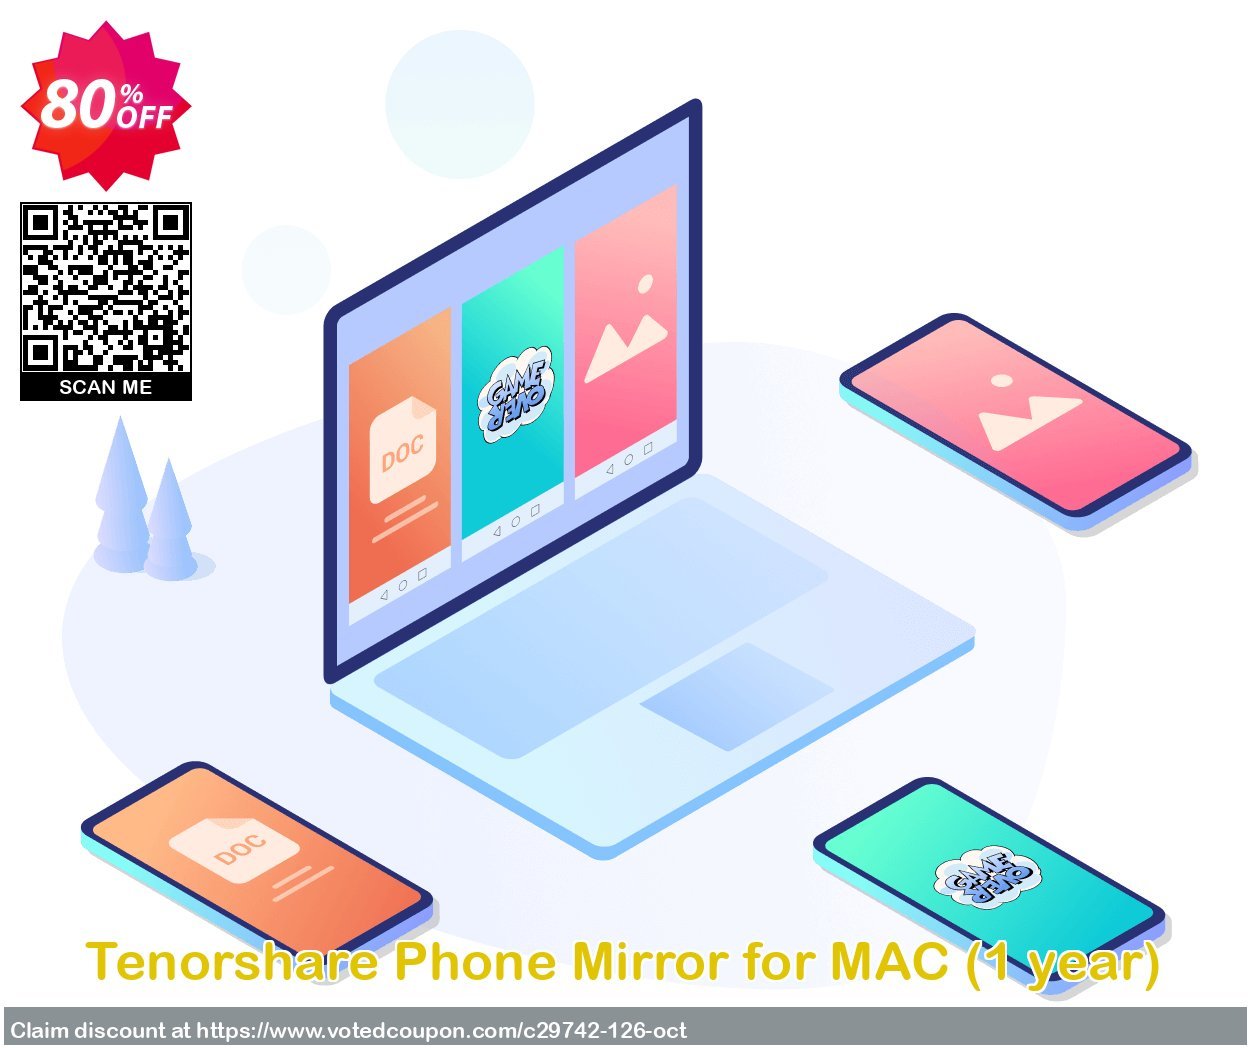 Tenorshare Phone Mirror for MAC, 1 Quarter 